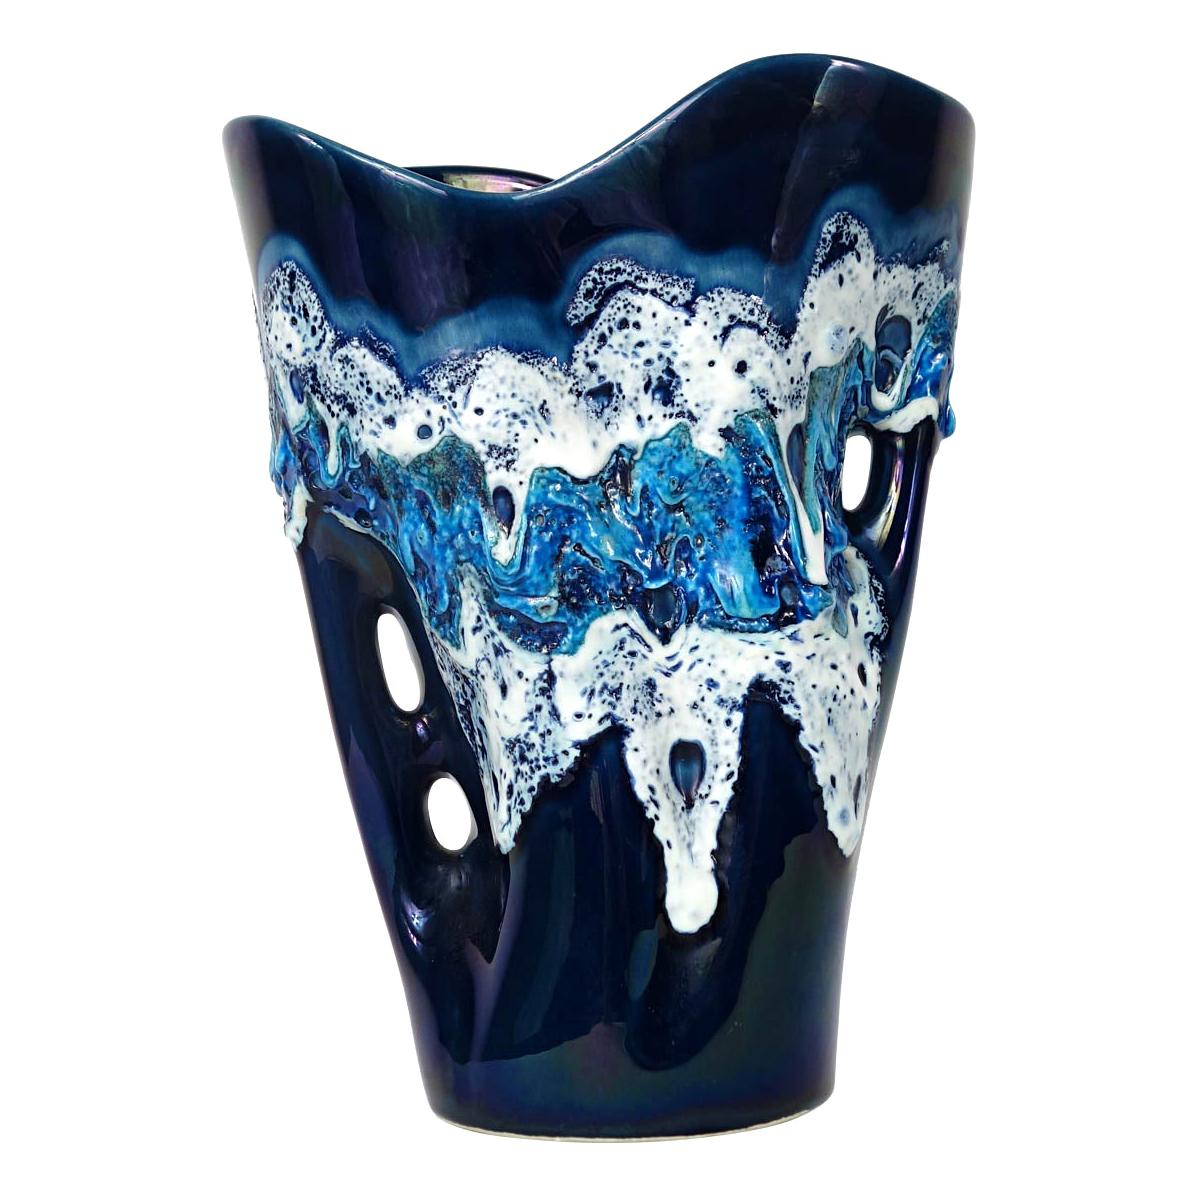 Mid-Century Modern Blue Vase by French Ceramics Specialist Vallauris